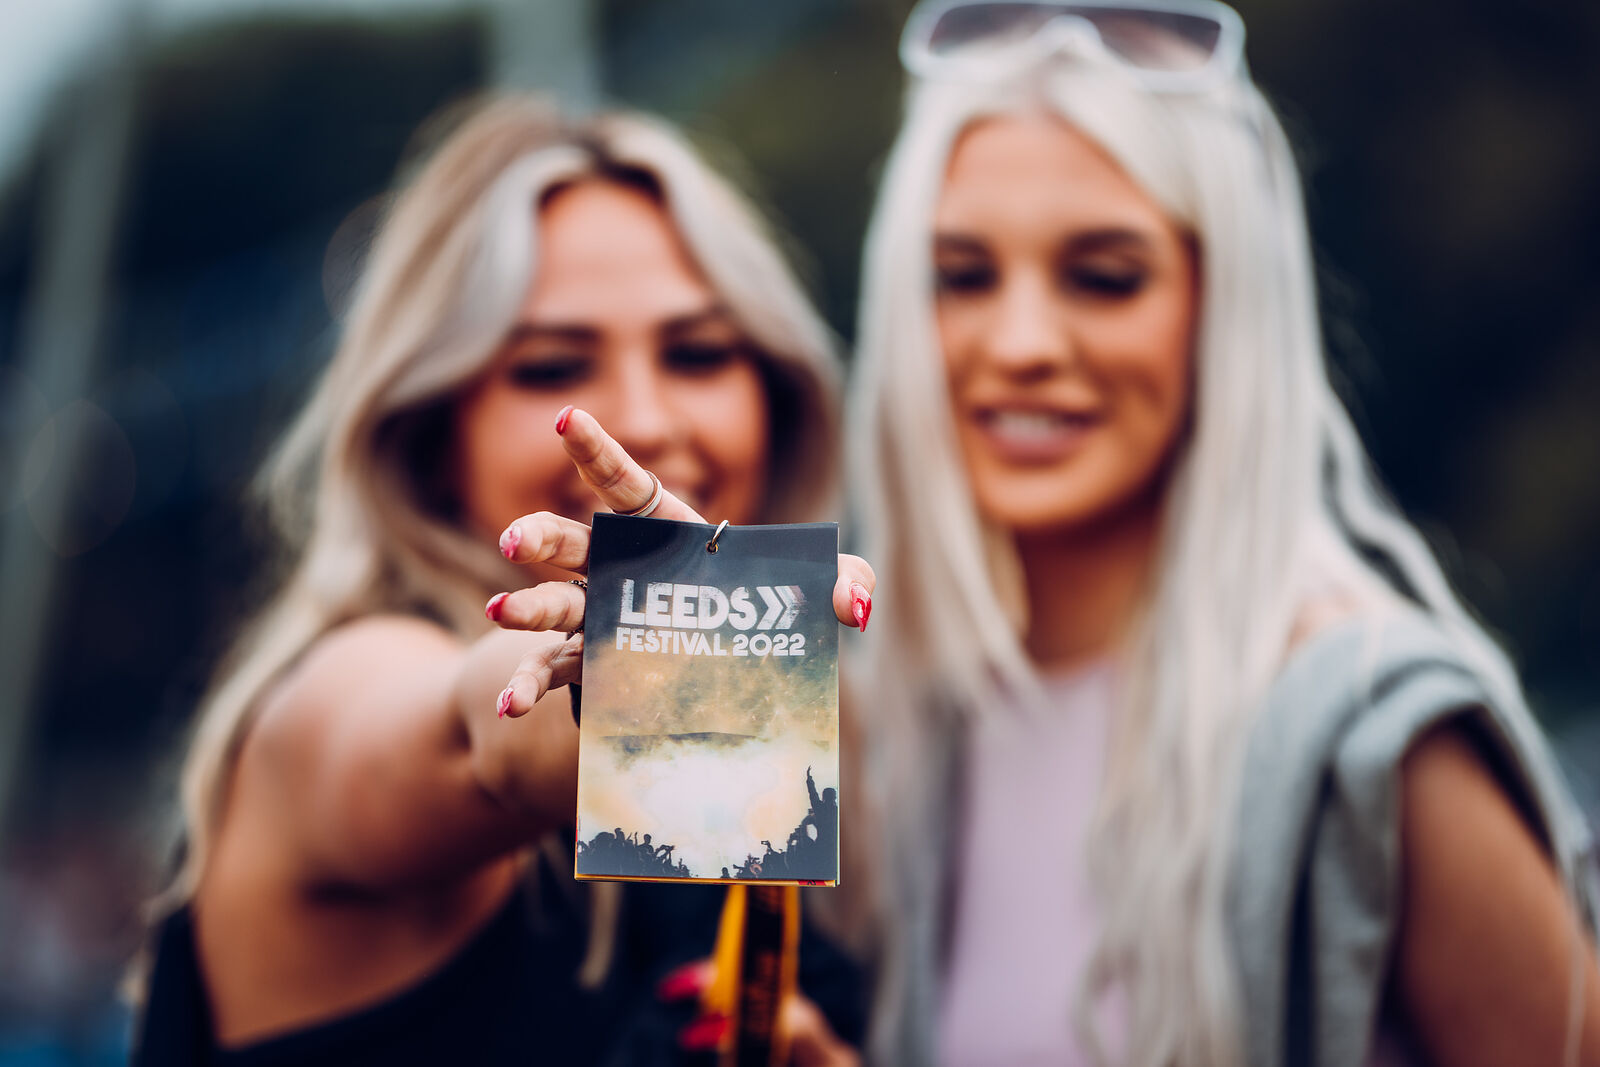 Leeds Festival 2022